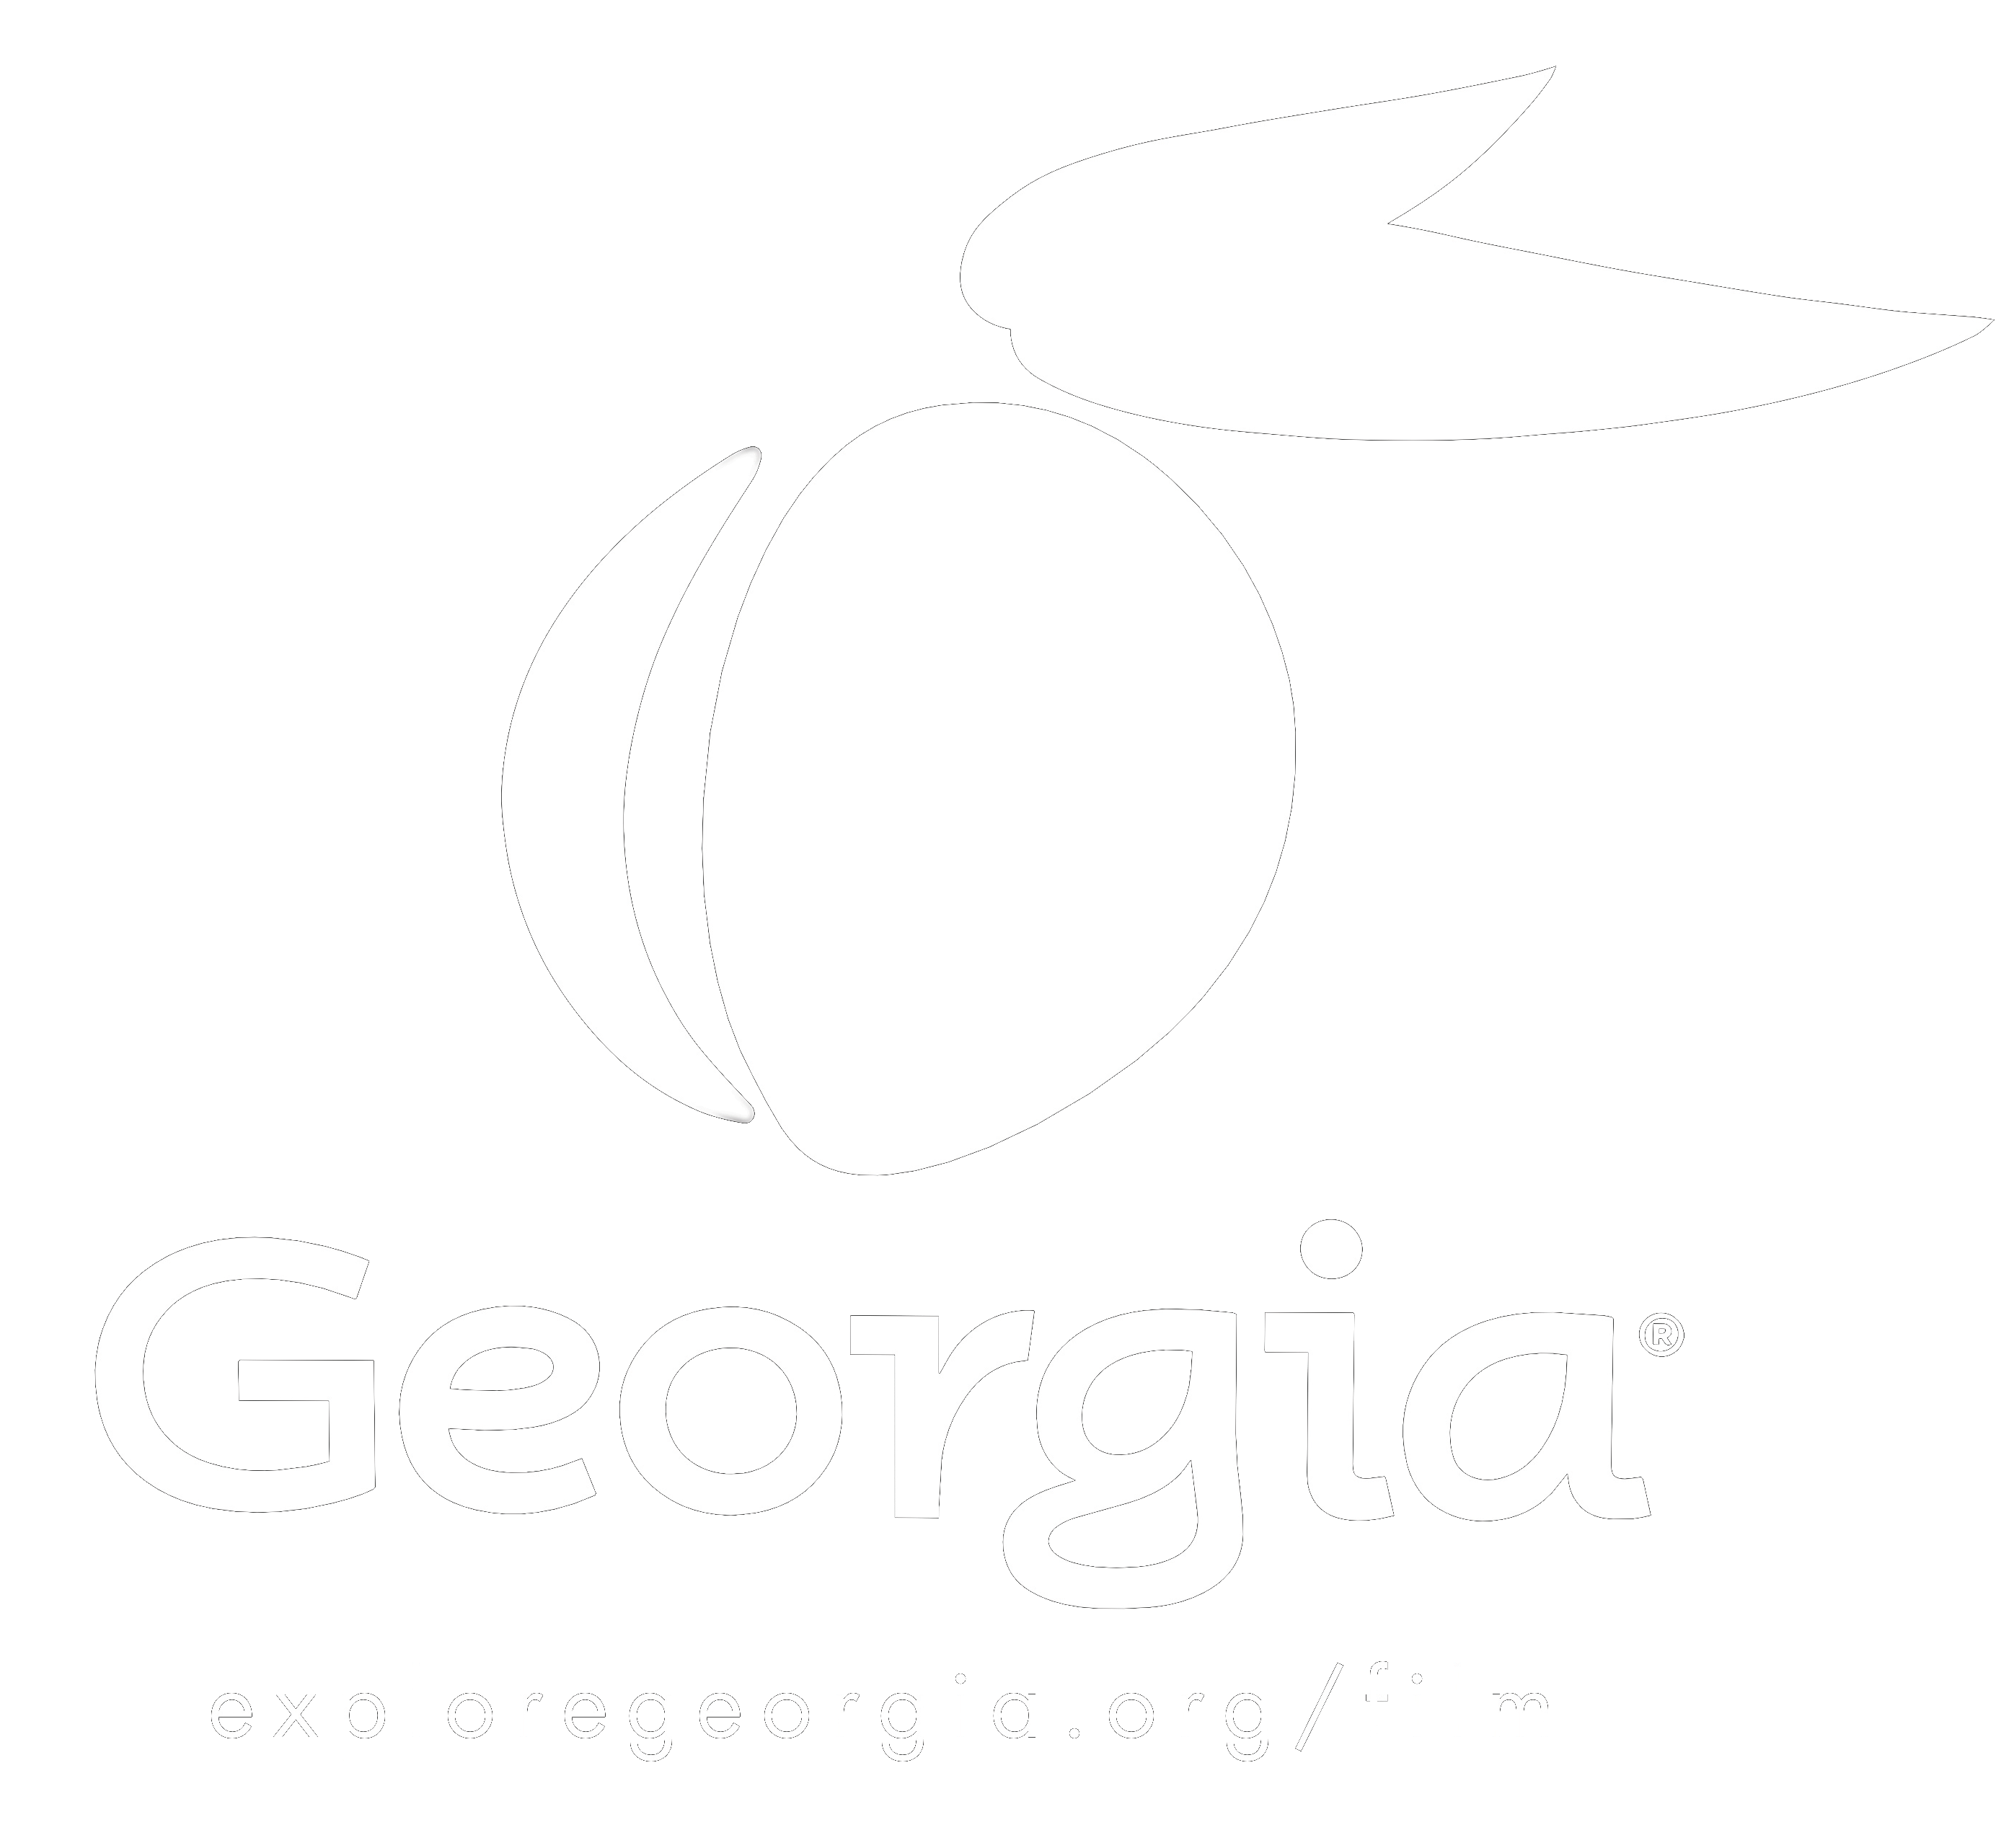 Georgia Film Logo Image